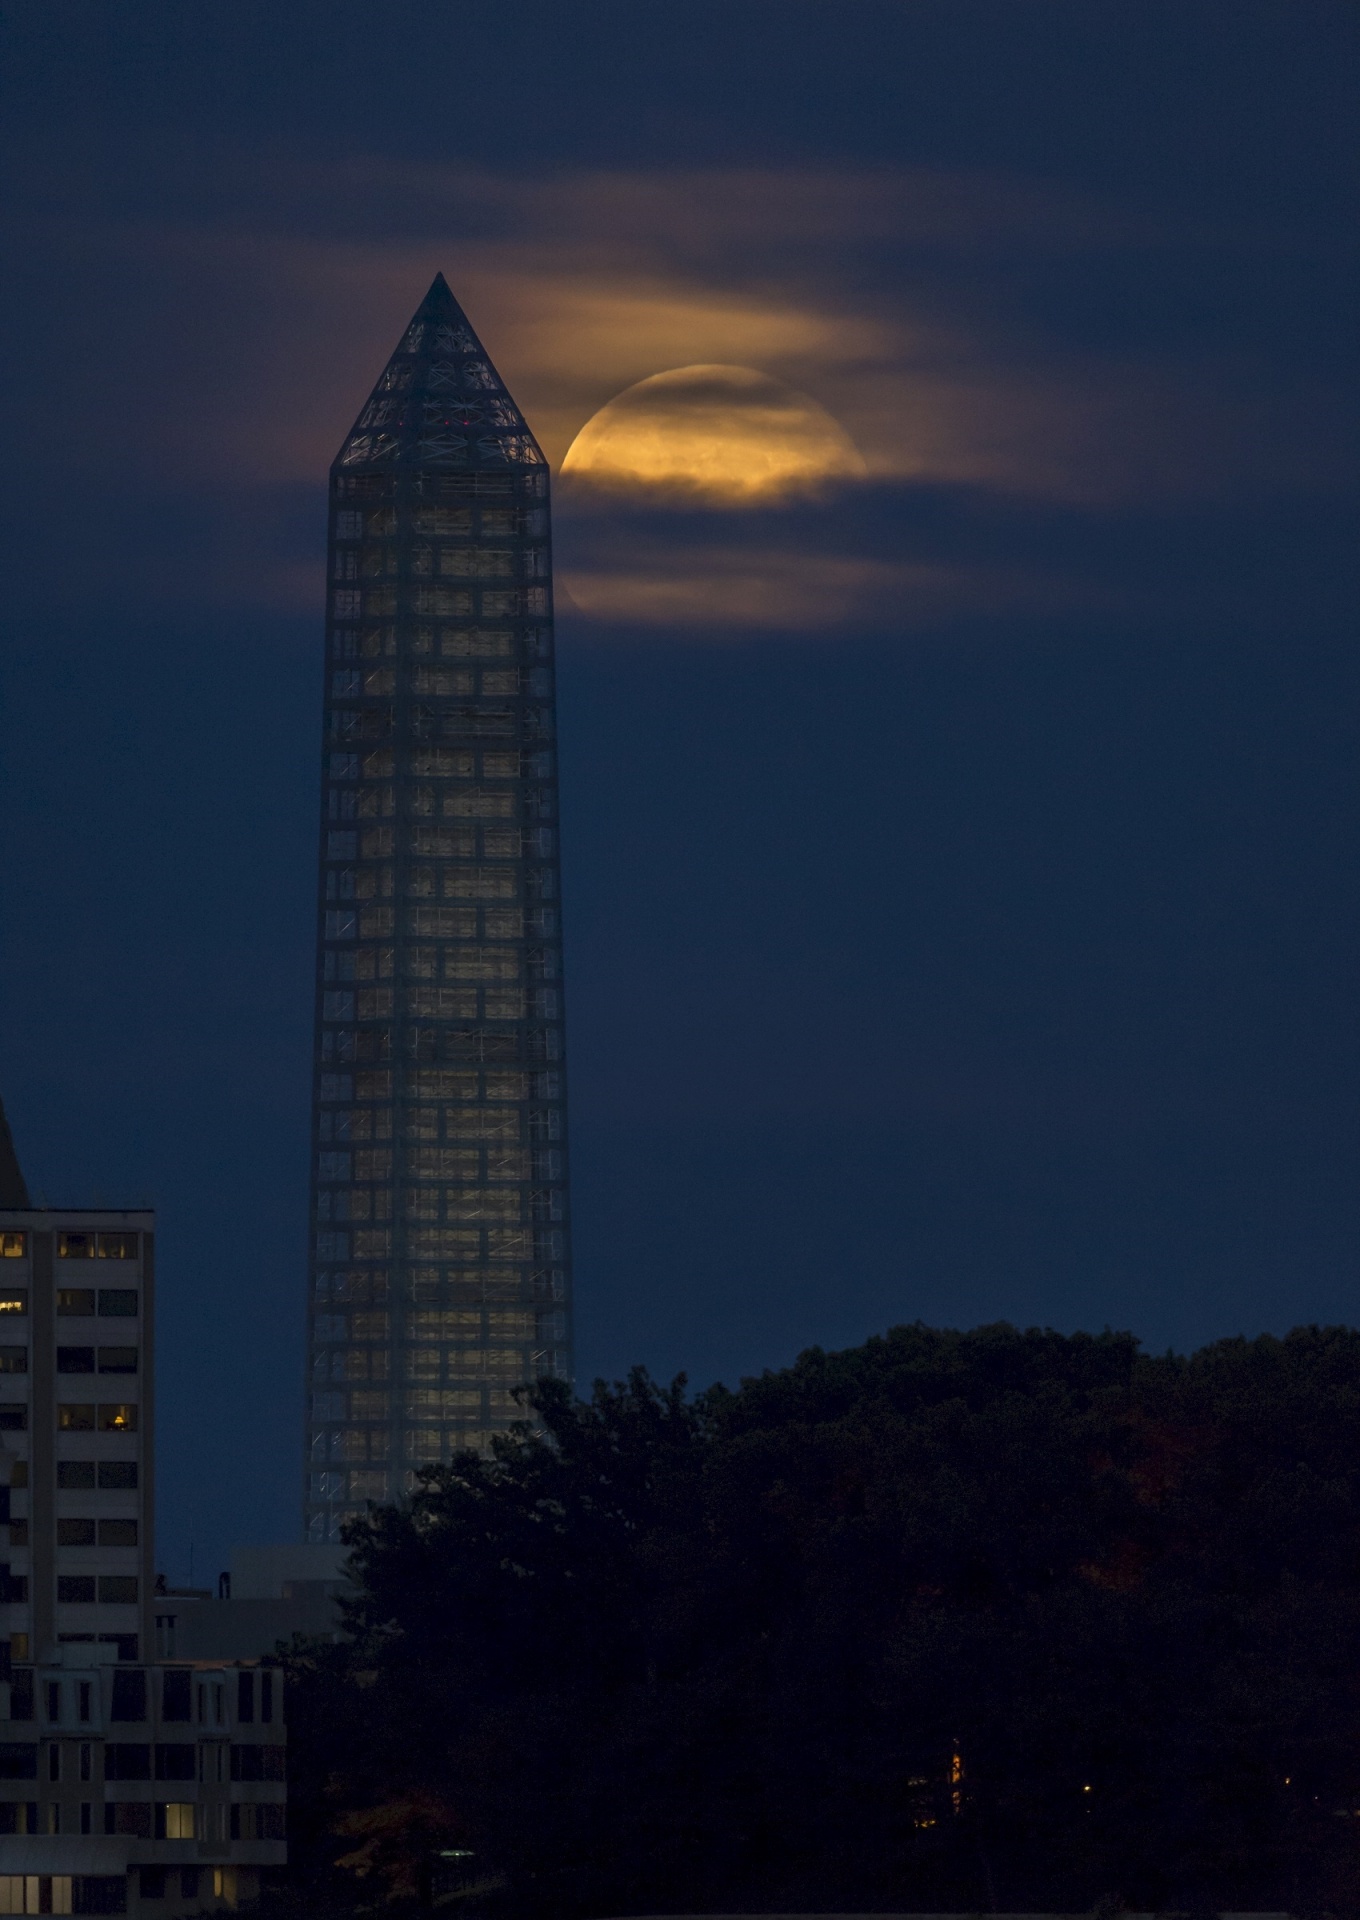 Moon Behind Washington Monument